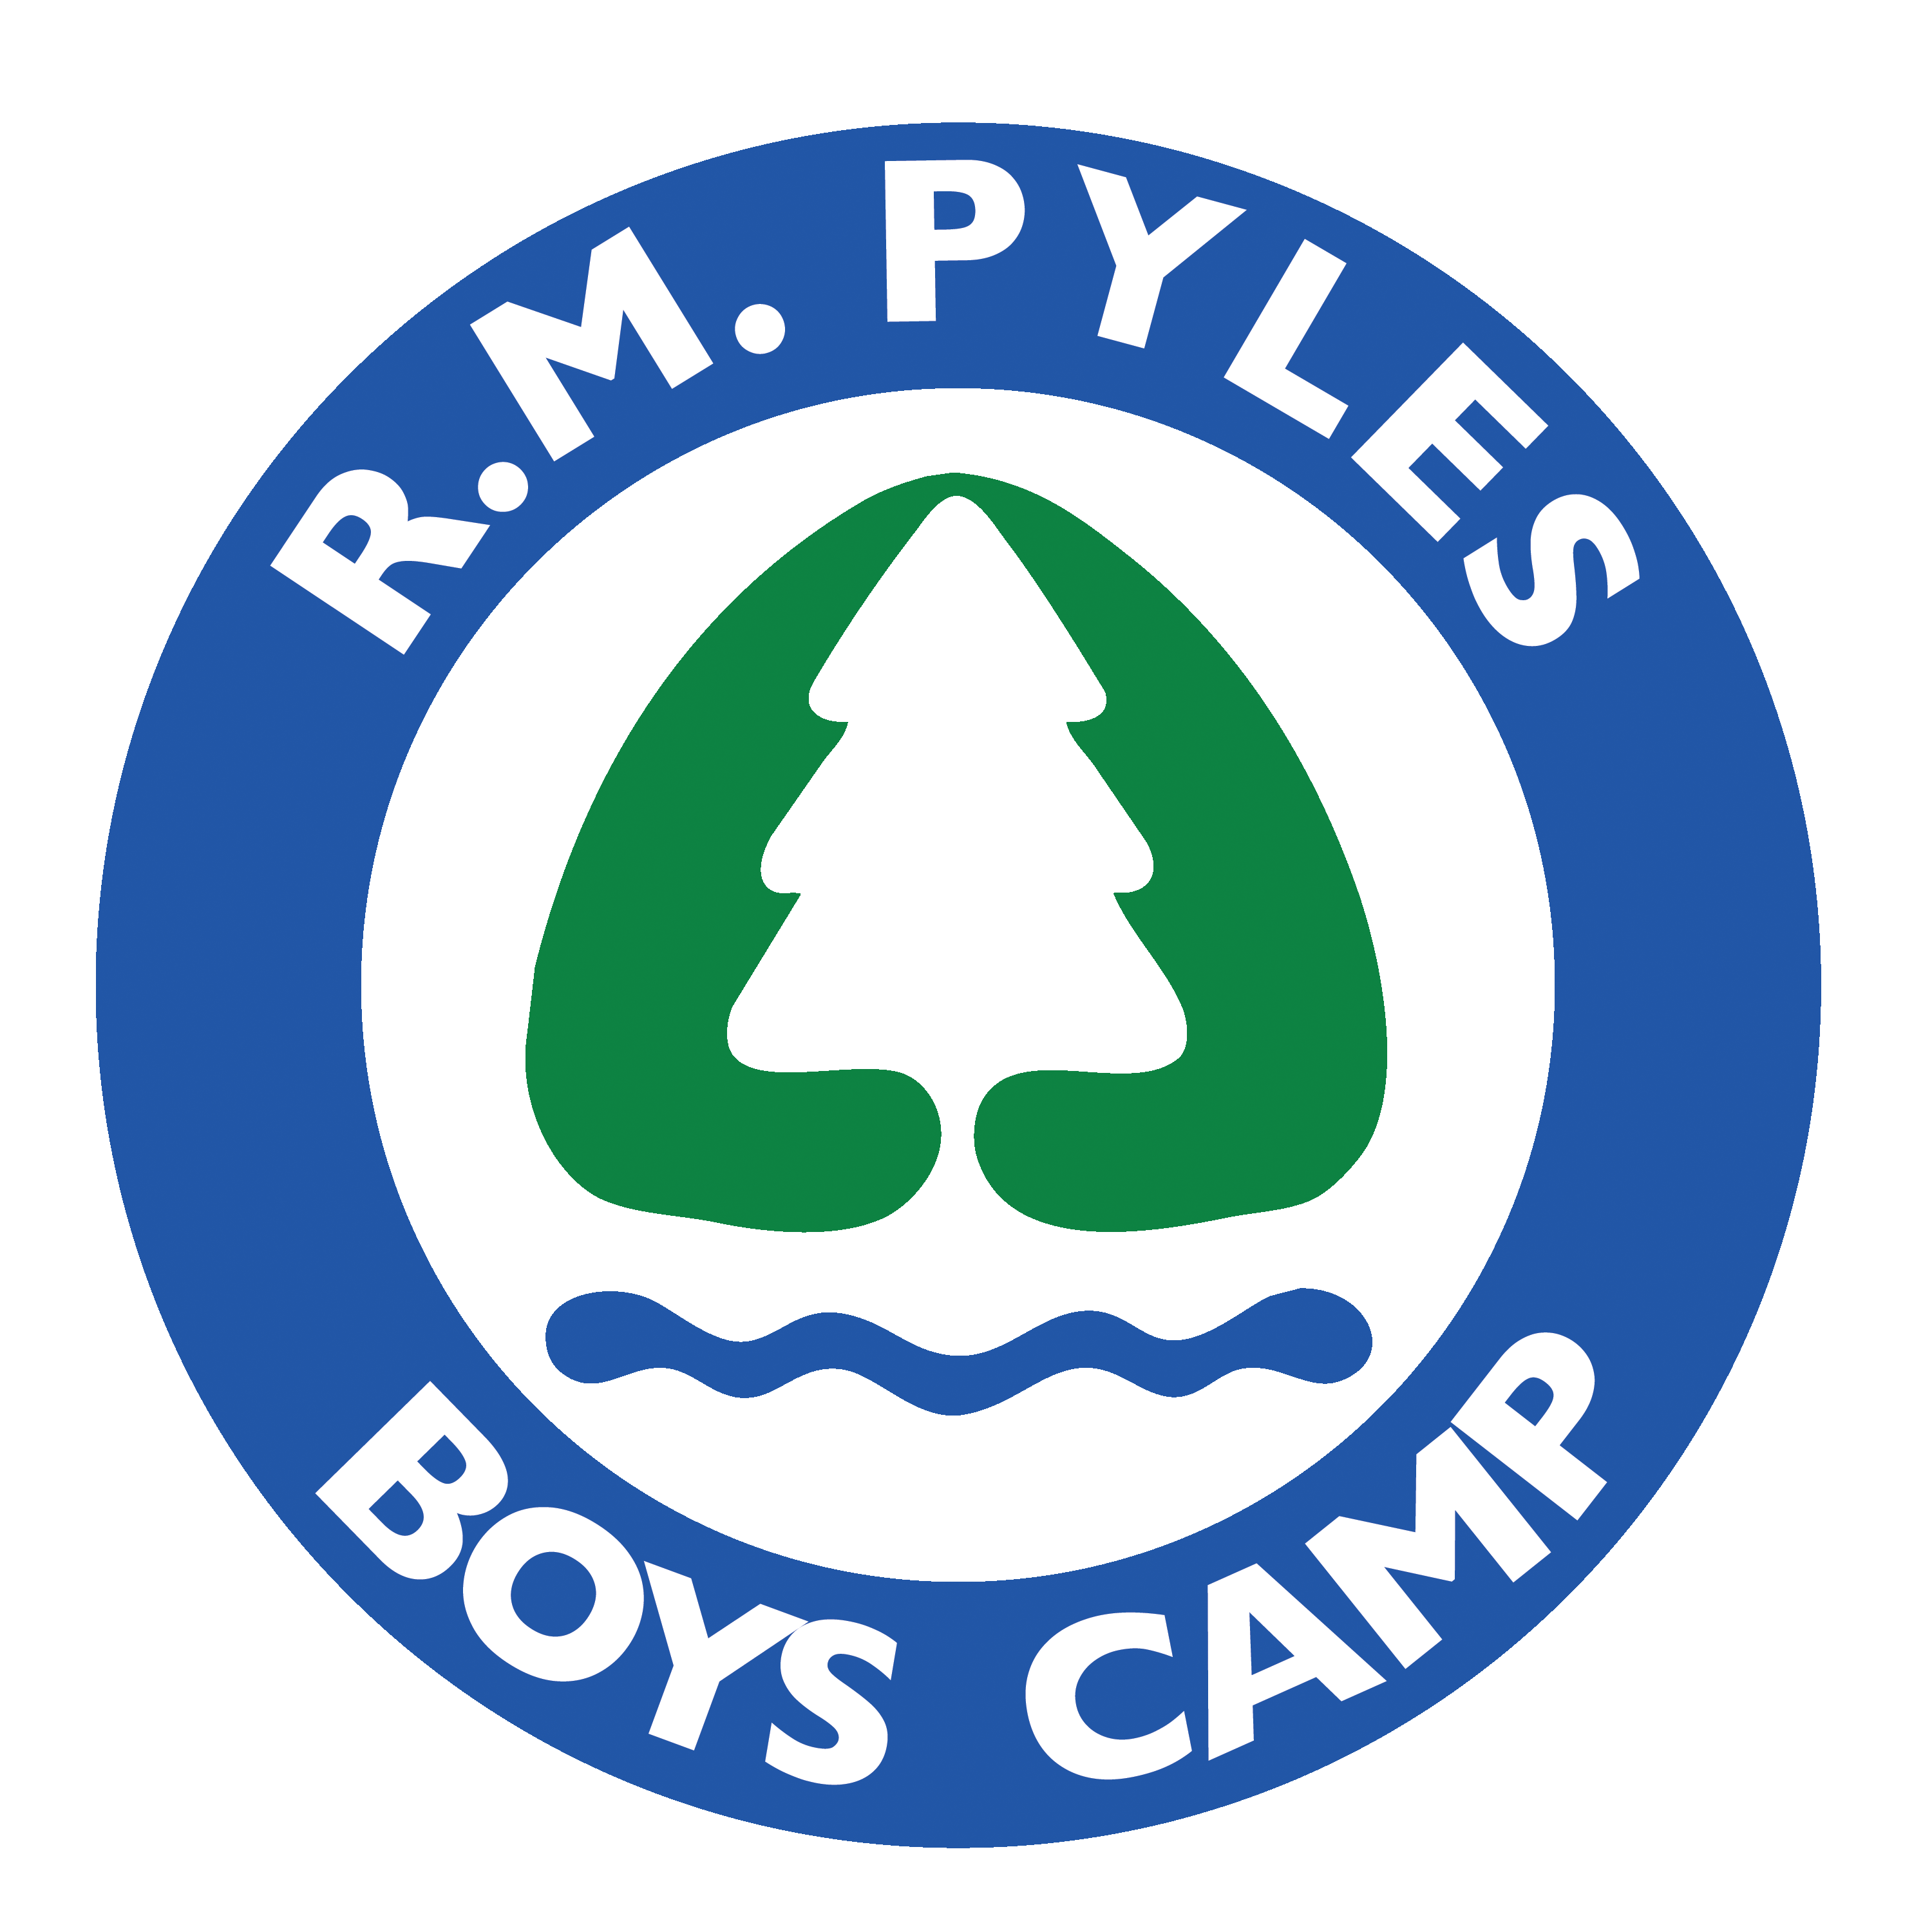 R.M. Pyles Boys Camp logo